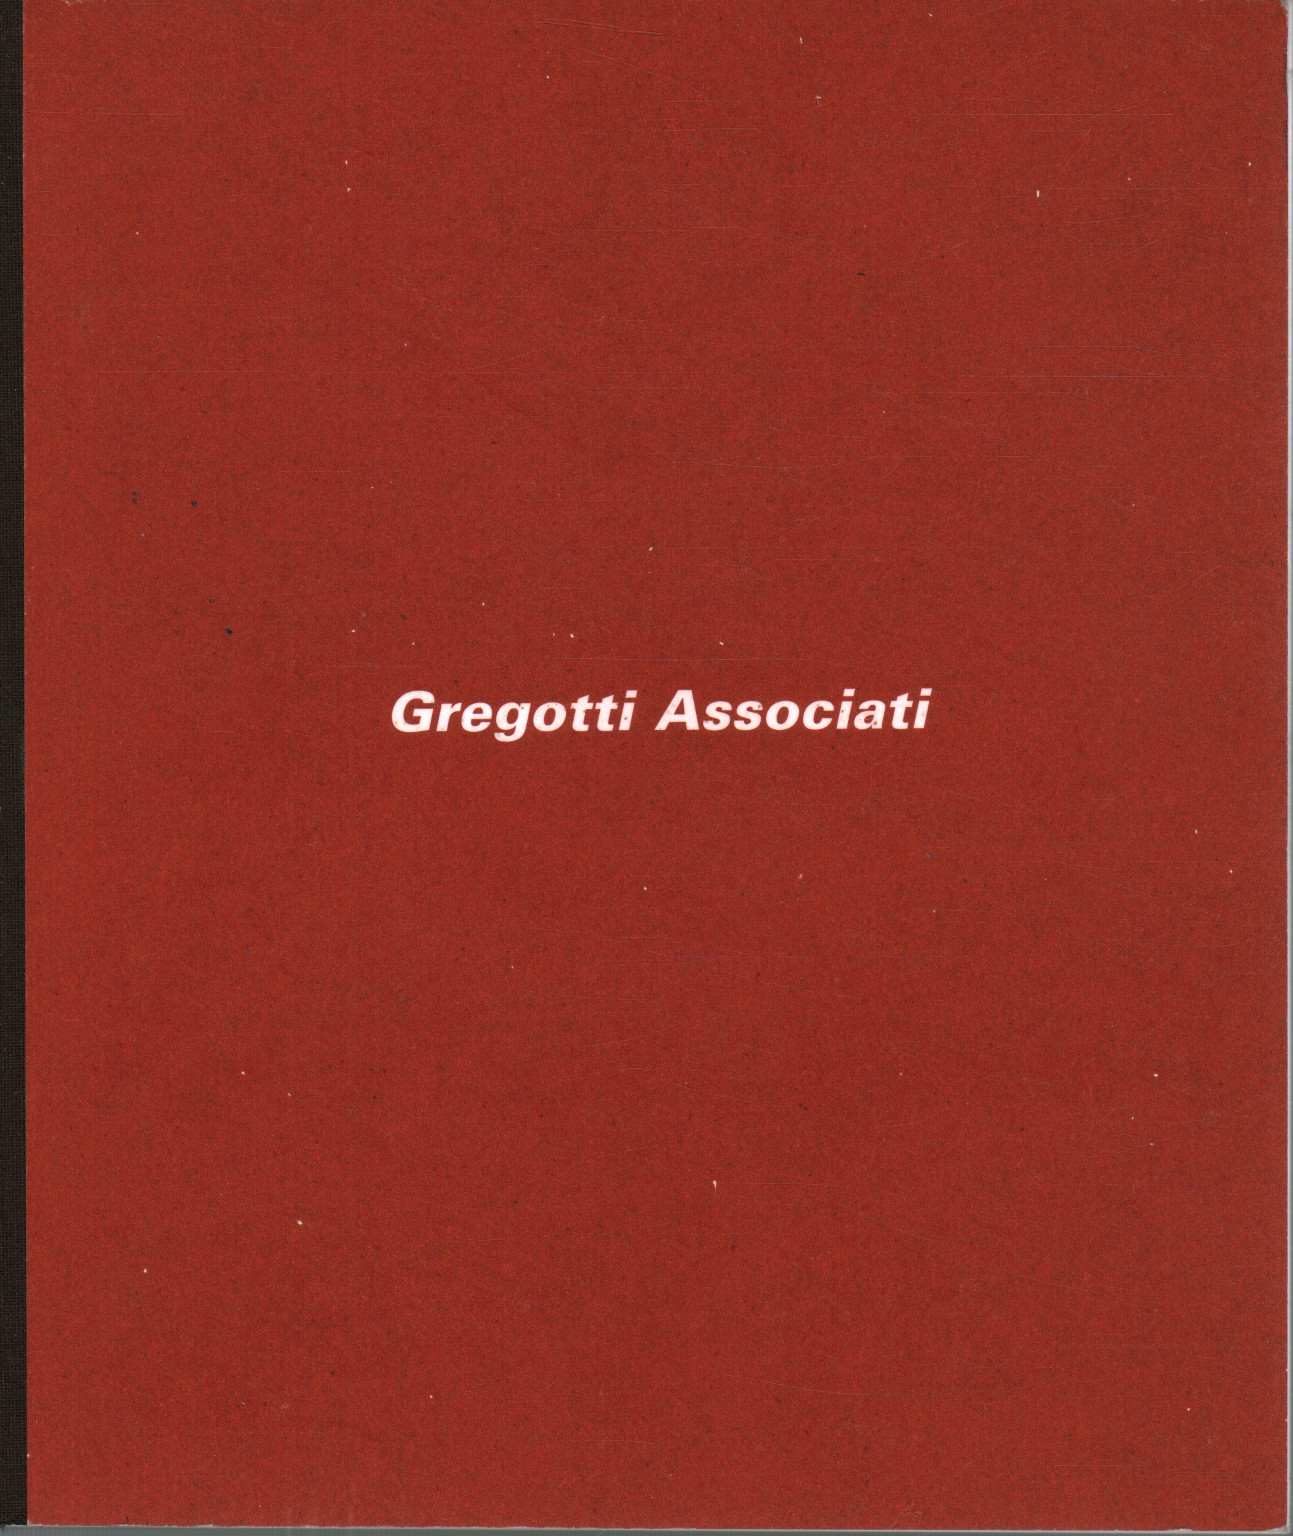 Gregotti Associati International, s.zu.